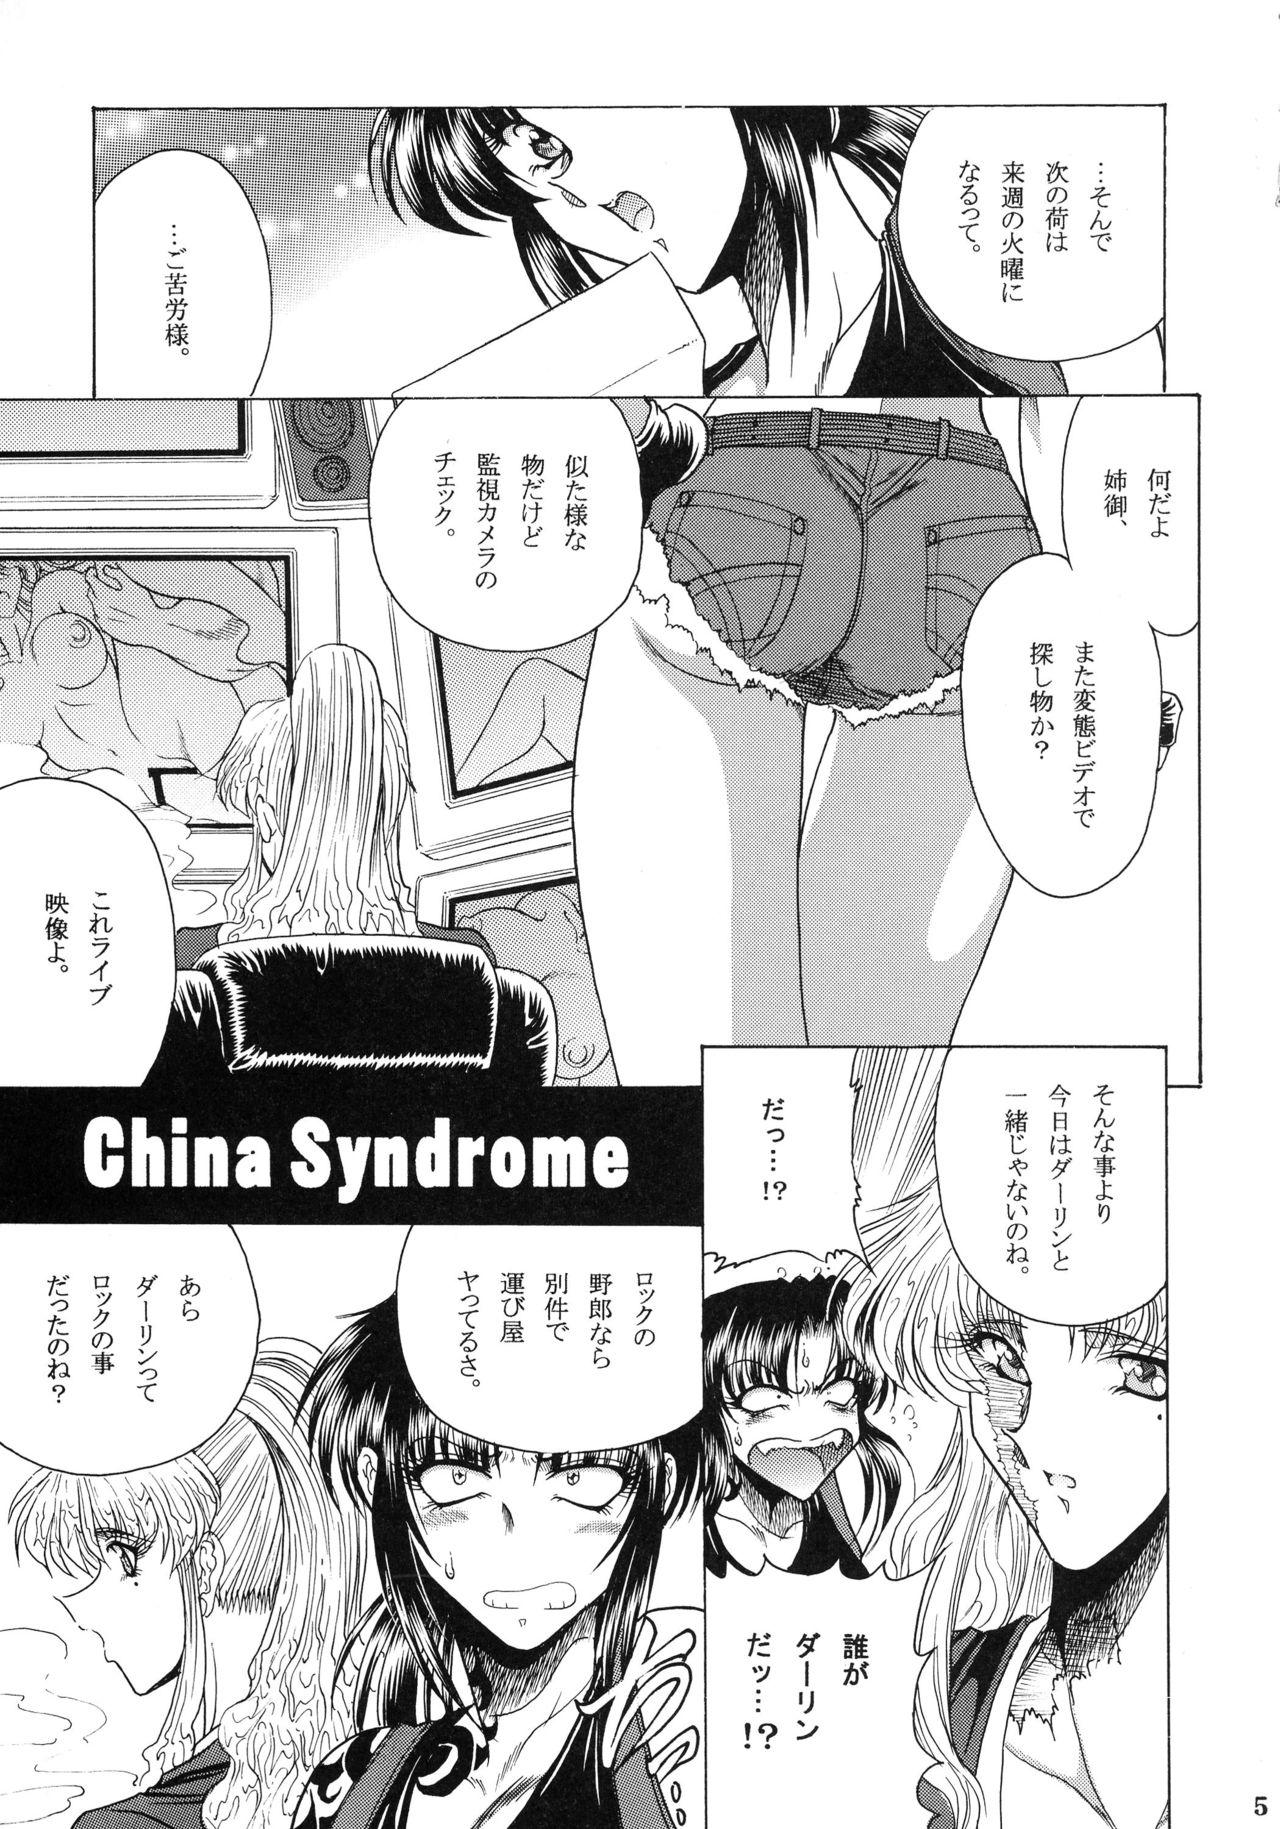 ZONE 38 China Syndrome 3